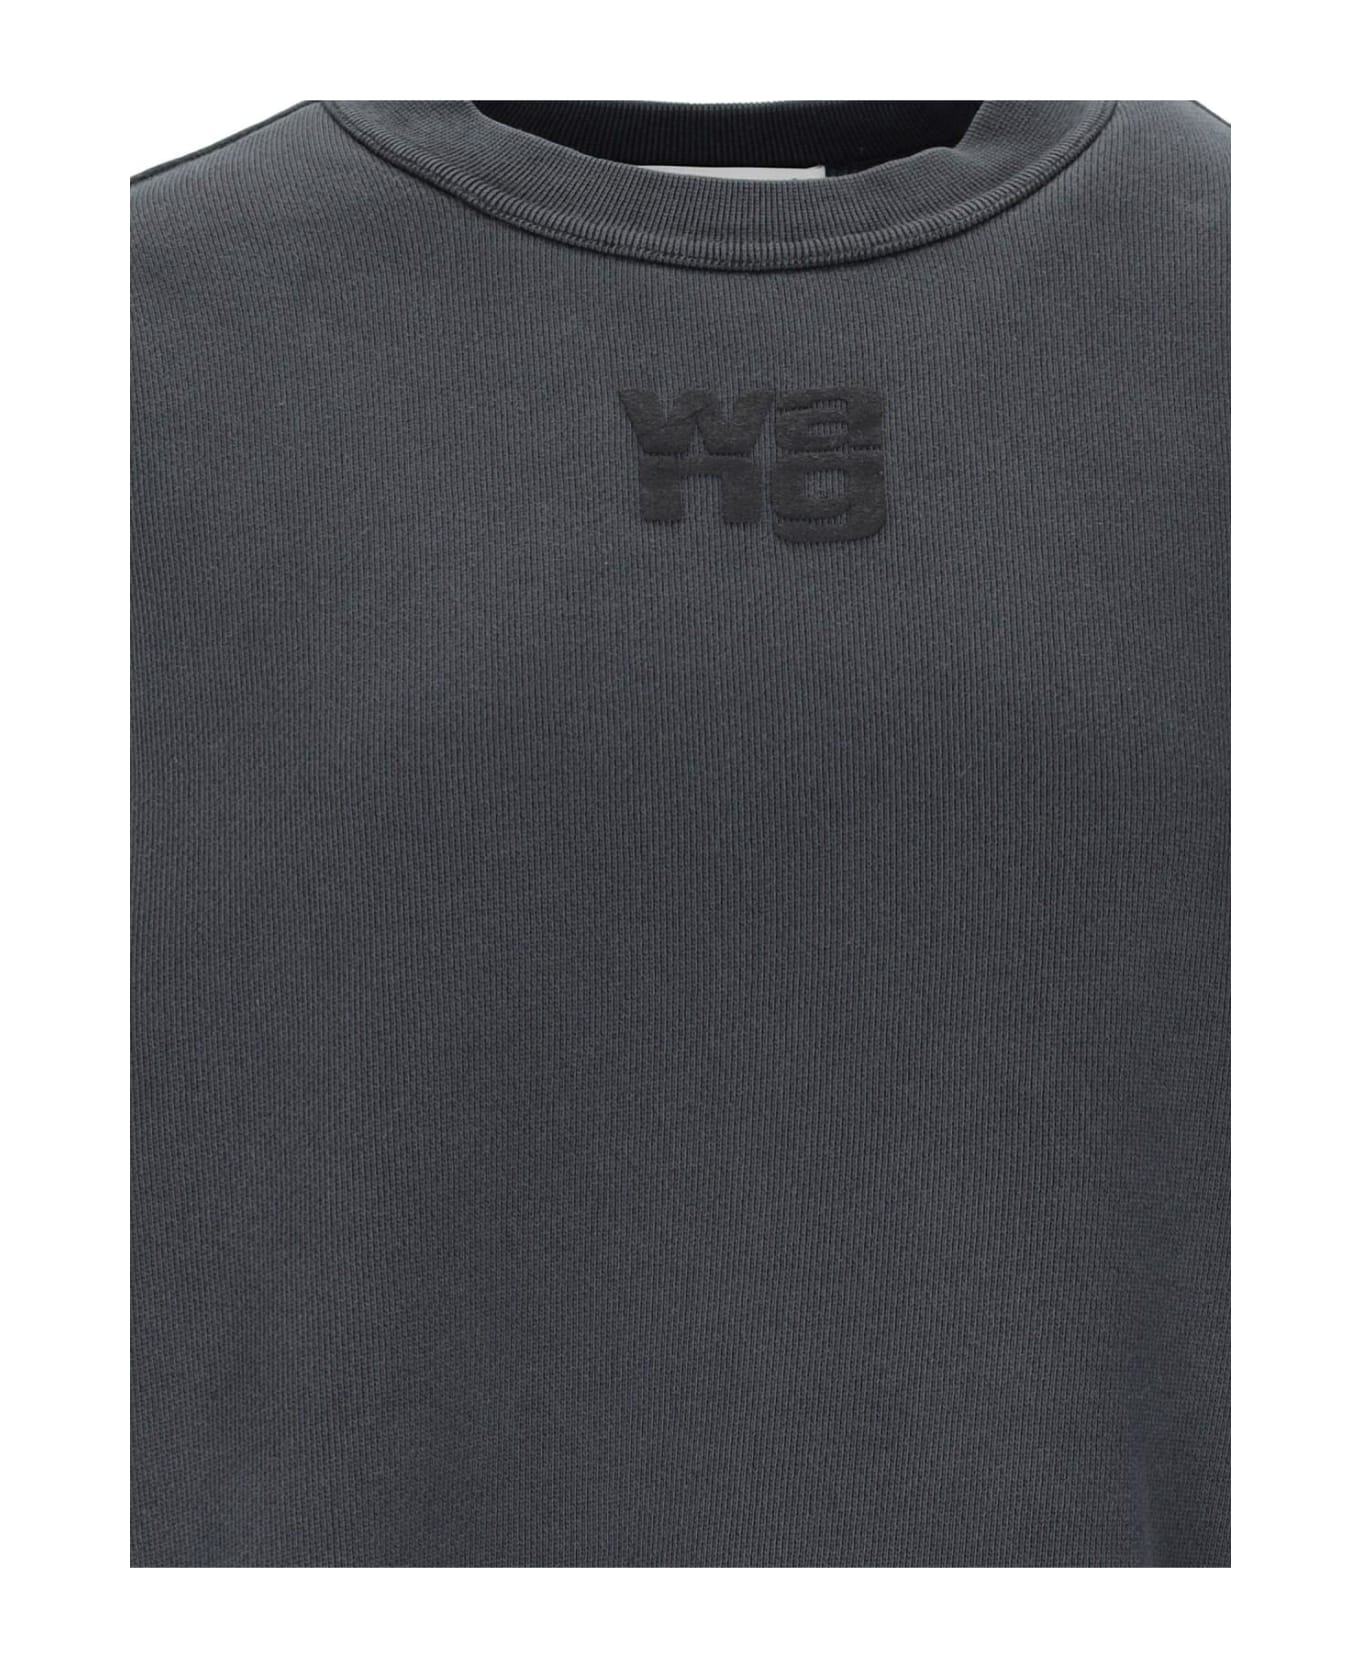 Alexander Wang Logo Crew Neck Sweatshirt - A Soft Obsidian